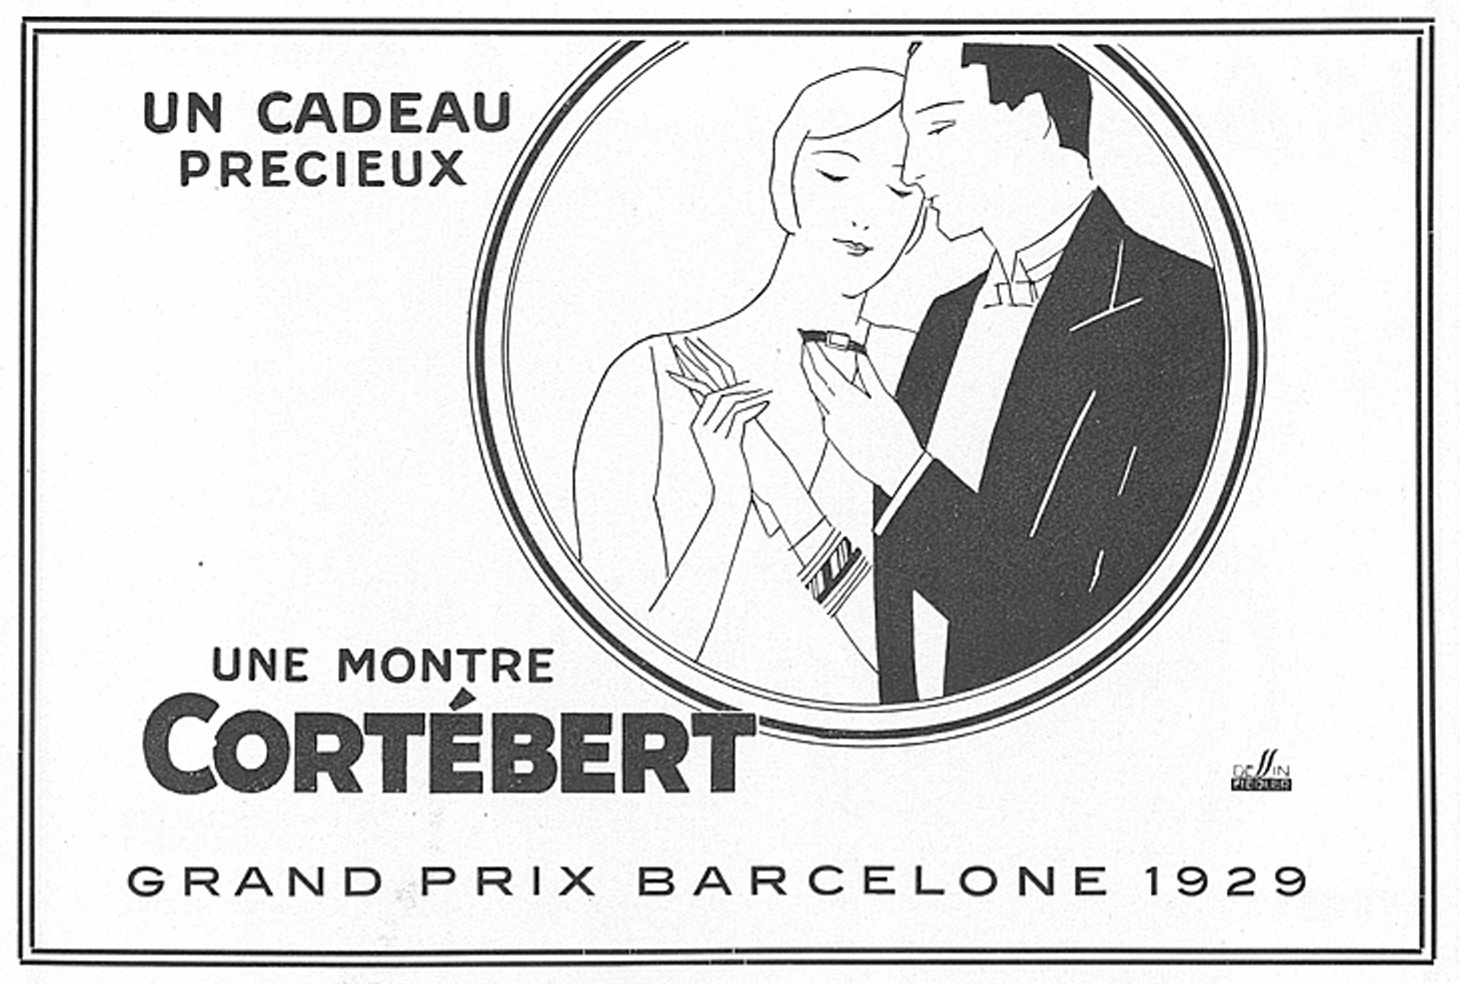 Cortebert 1930 12.jpg